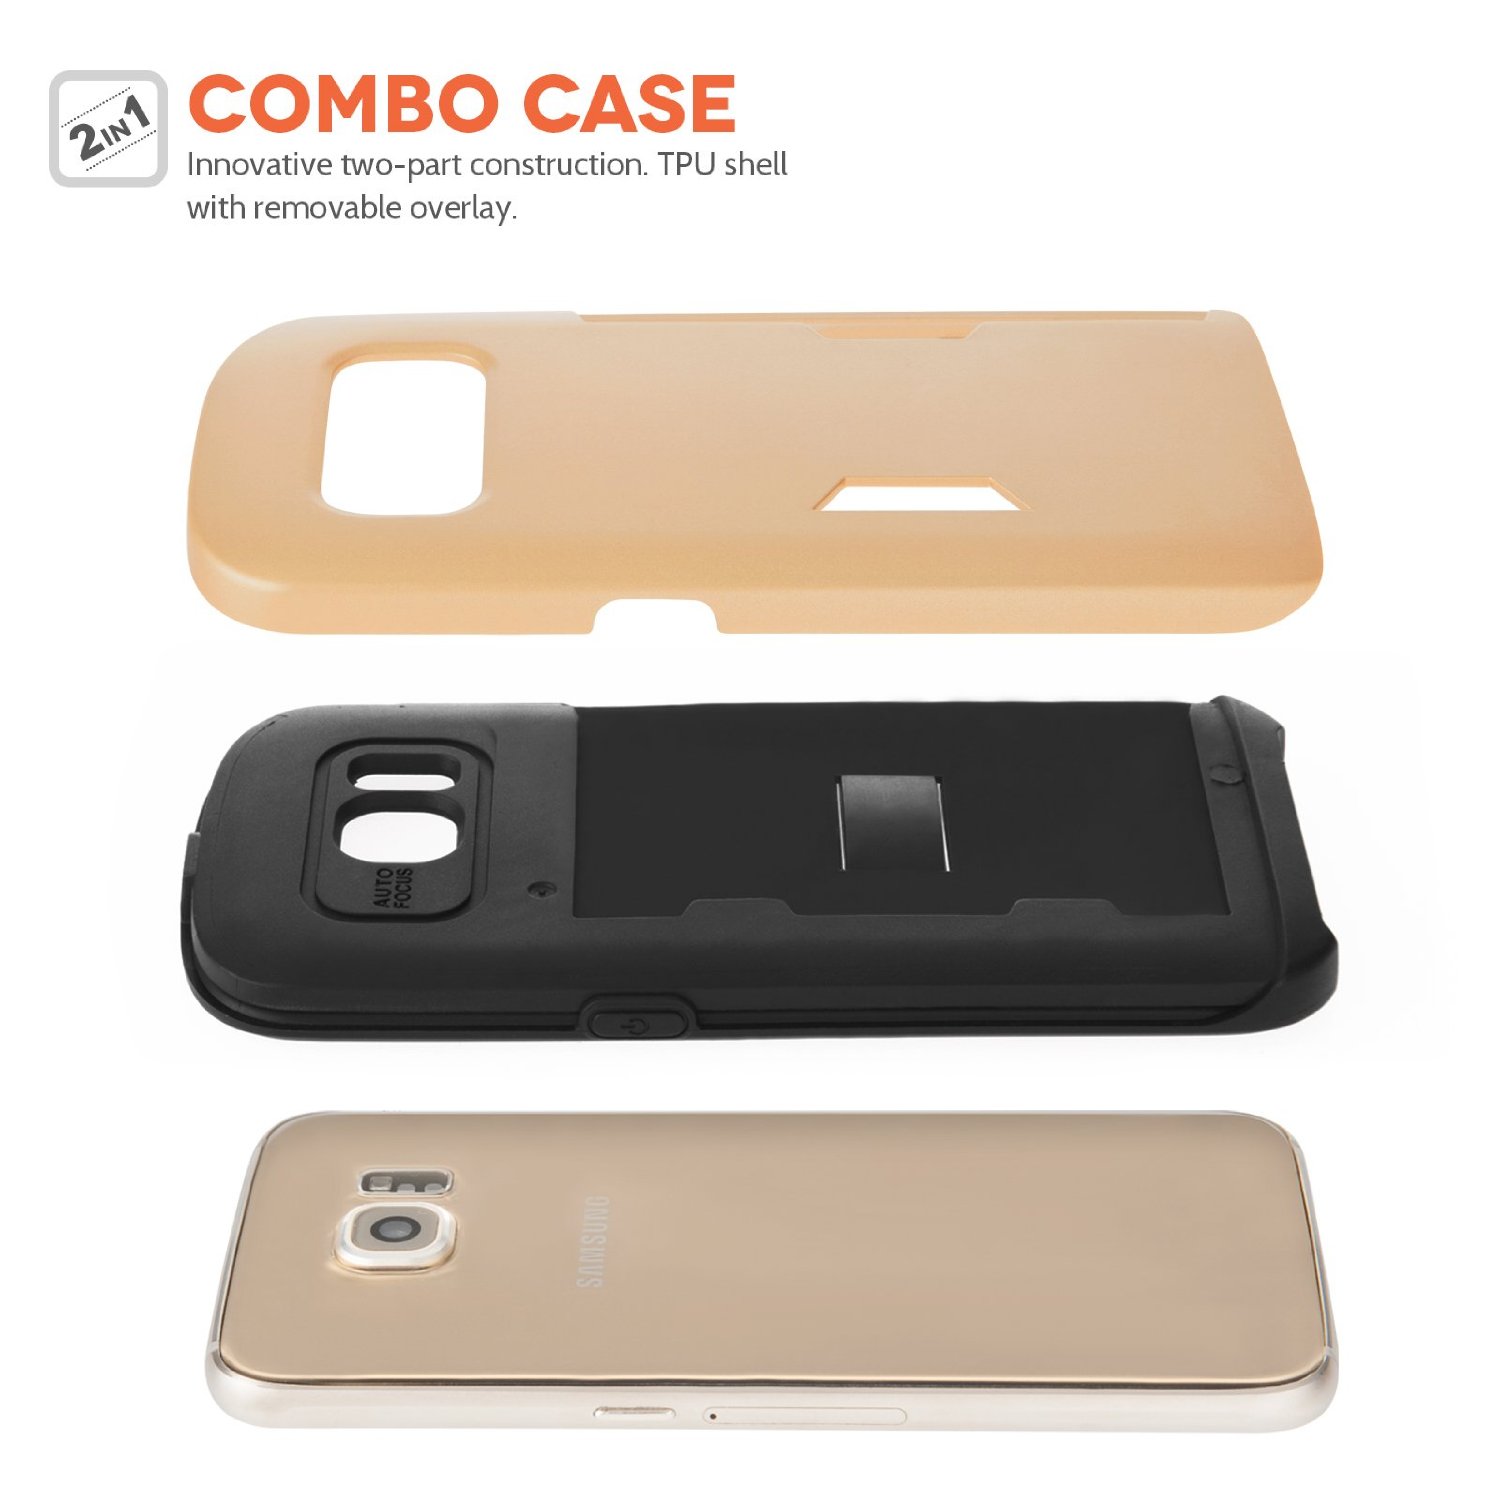 Caseflex Samsung Galaxy S6 Hard Case With Card Slots Matte Finish - Gold Case